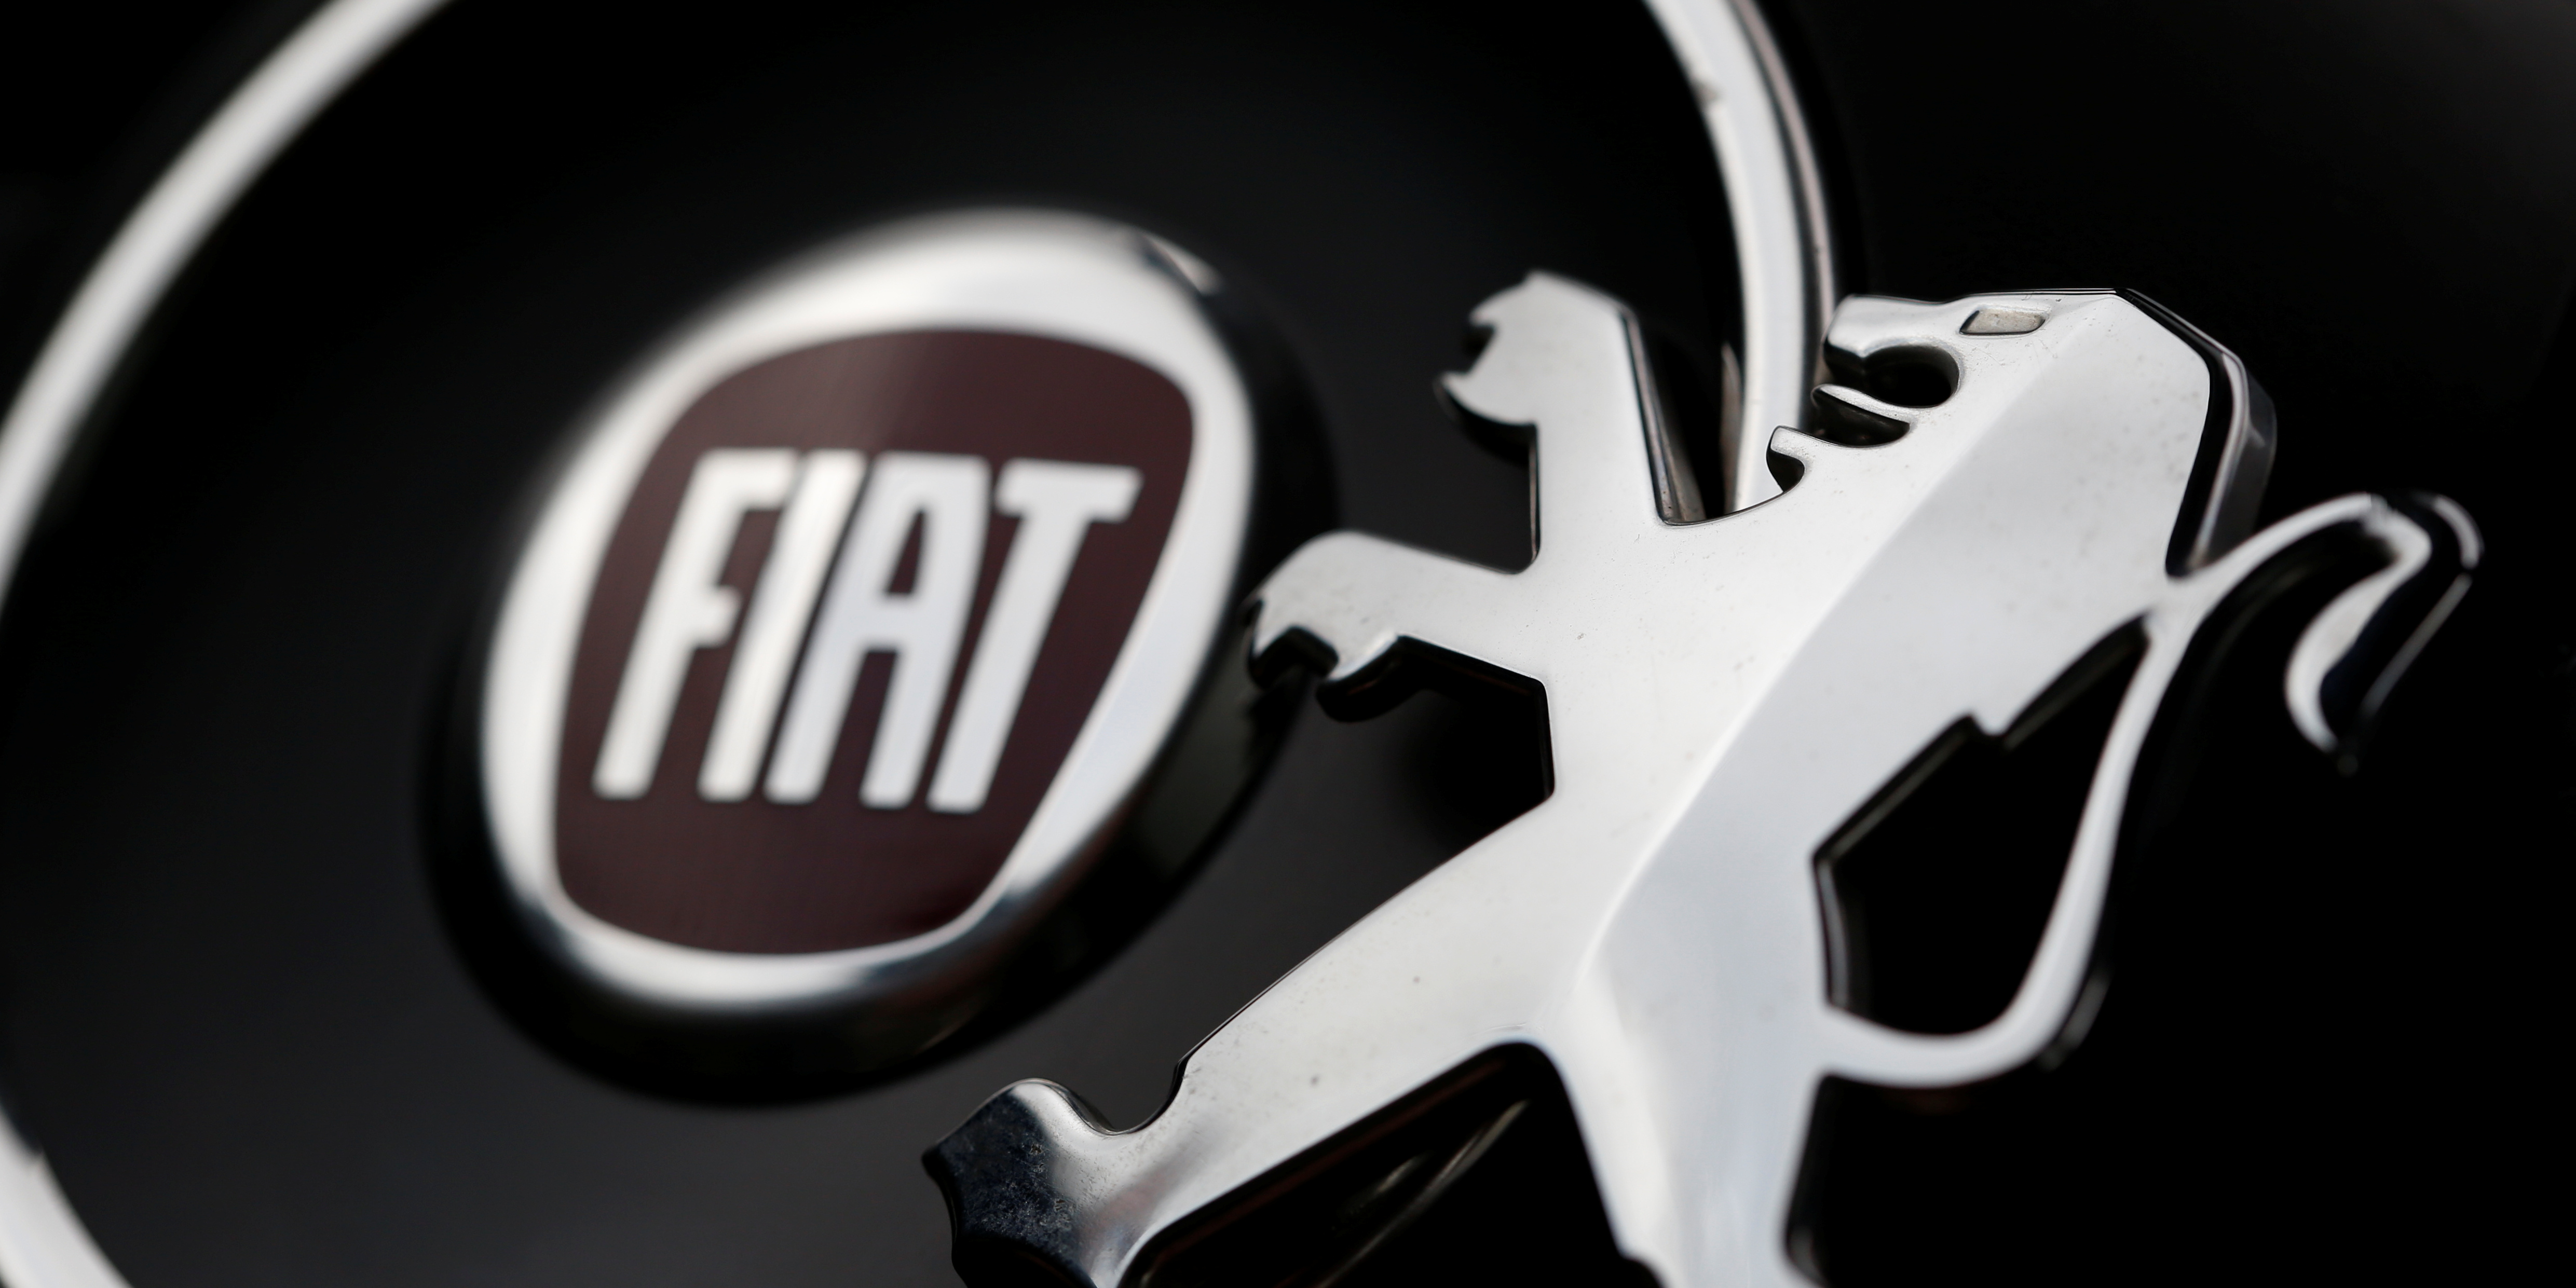 La fusion Fiat-Peugeot aura-t-elle lieu ?